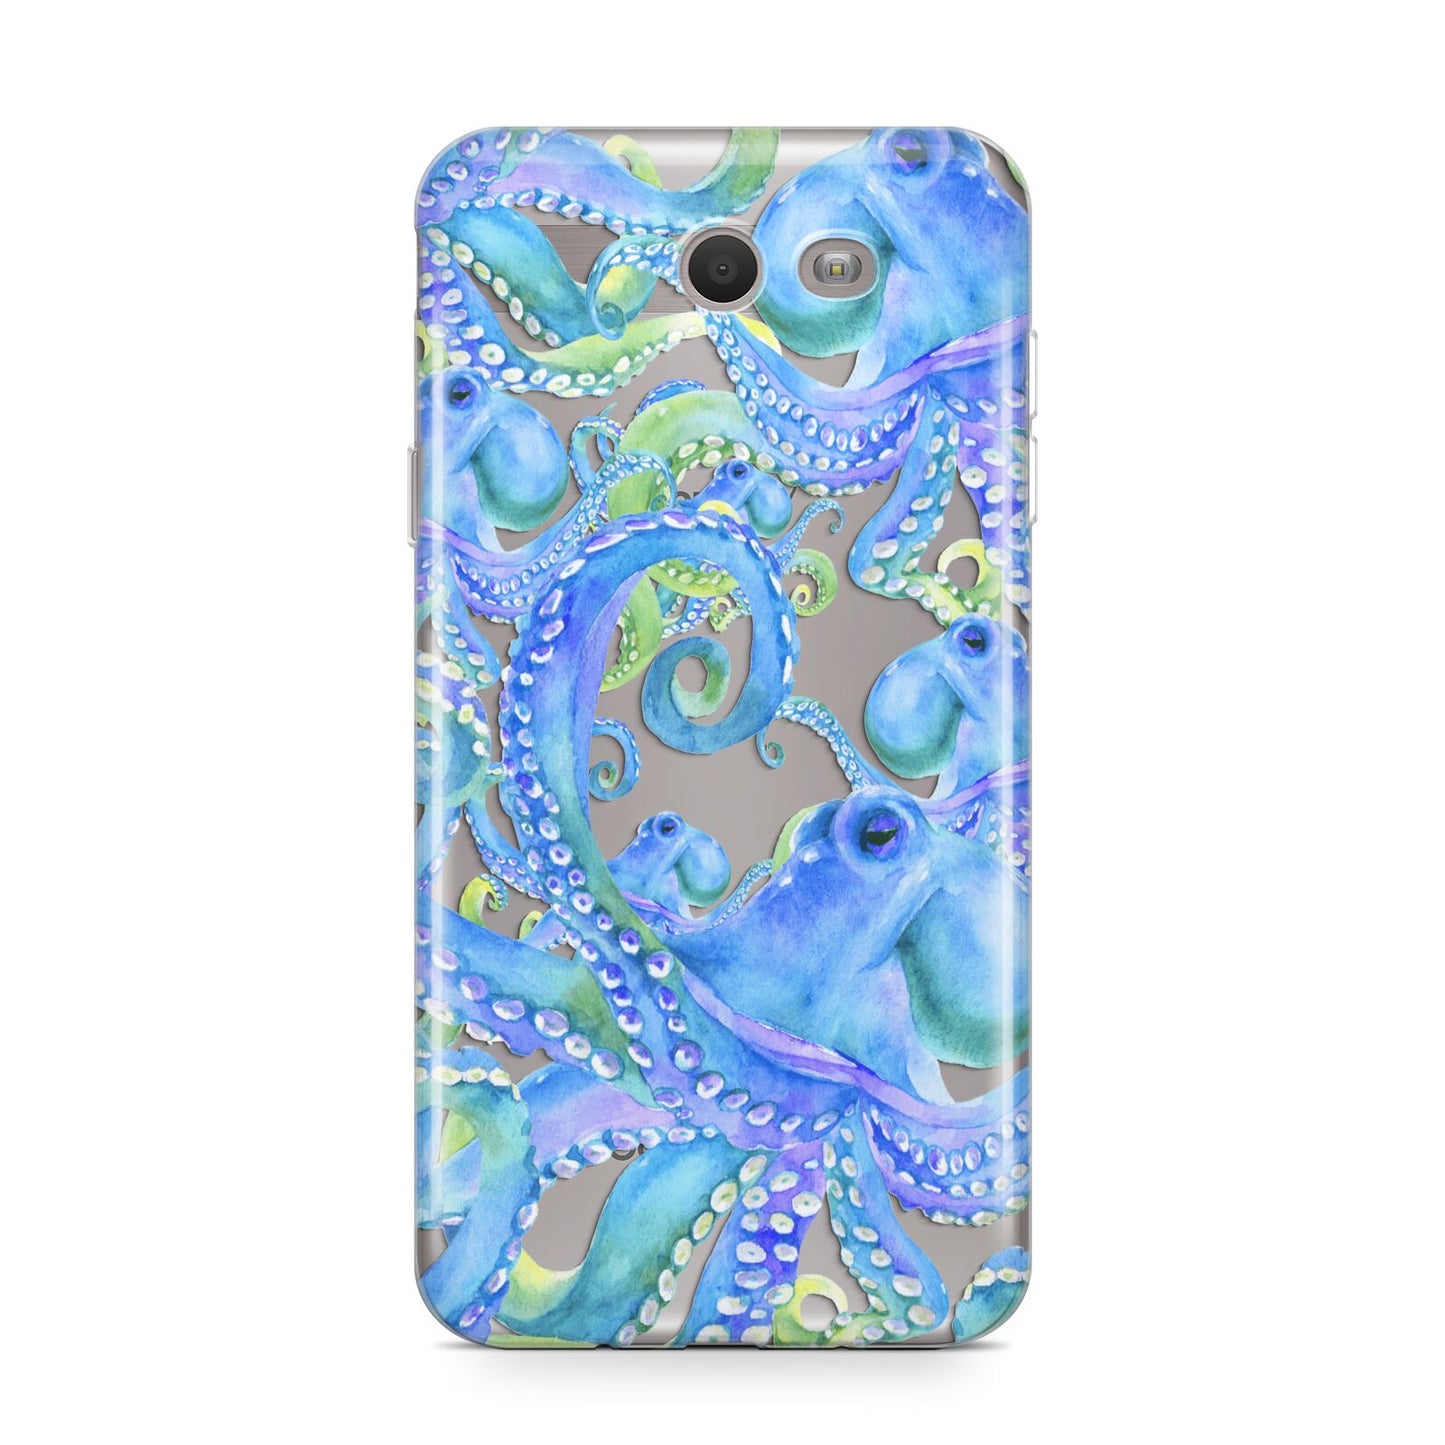 Octopus Samsung Galaxy J7 2017 Case